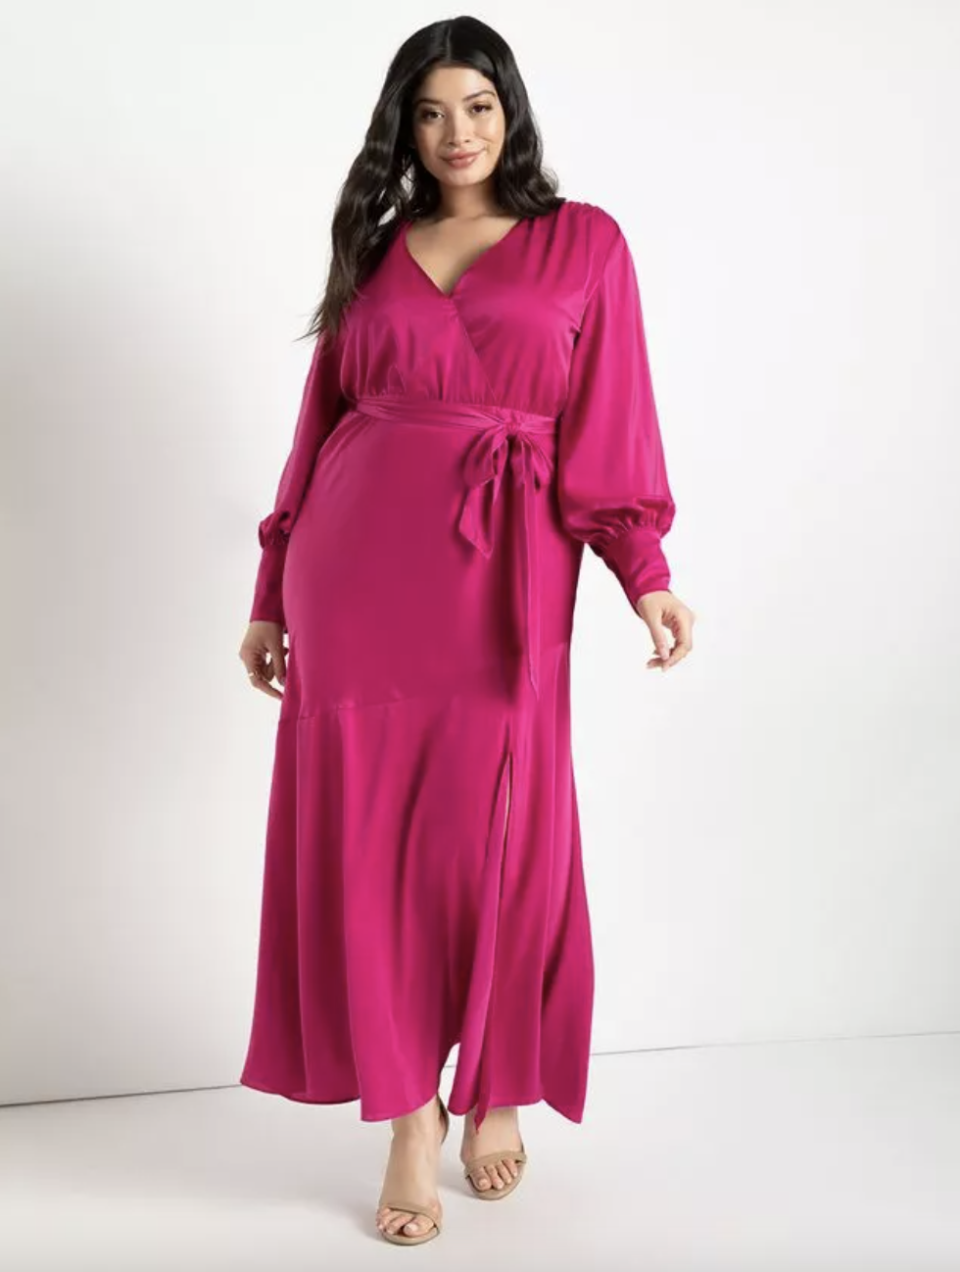 plus size model with long black hair in pink satin Eloquii Satin Maxi Dress (Photo via Eloquii)